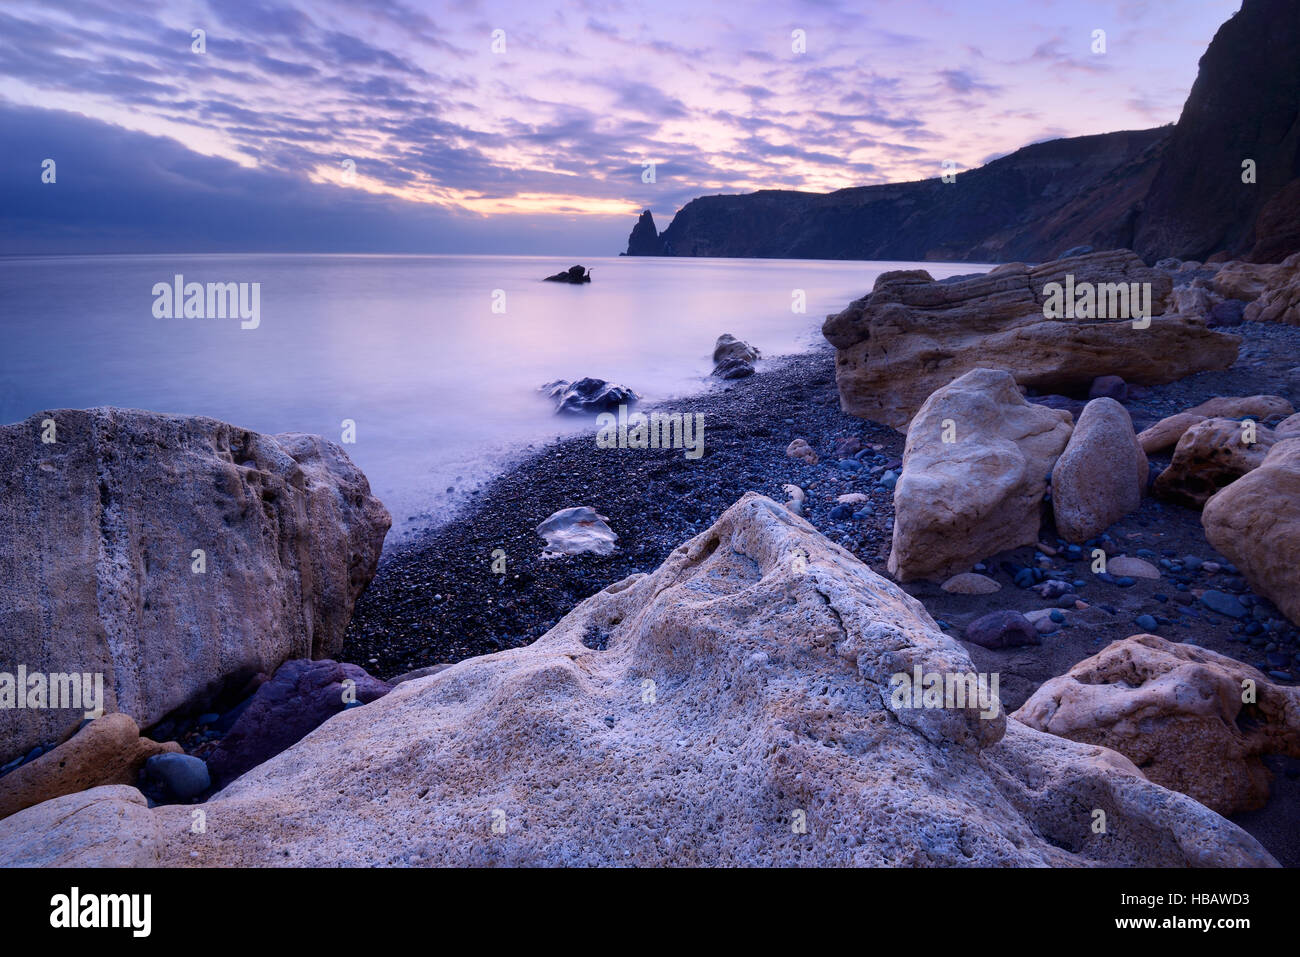 Rock formation from Yashmoviy Beach (Fiolent Beach) near Sevastopol, Crimea, Ukraine Stock Photo